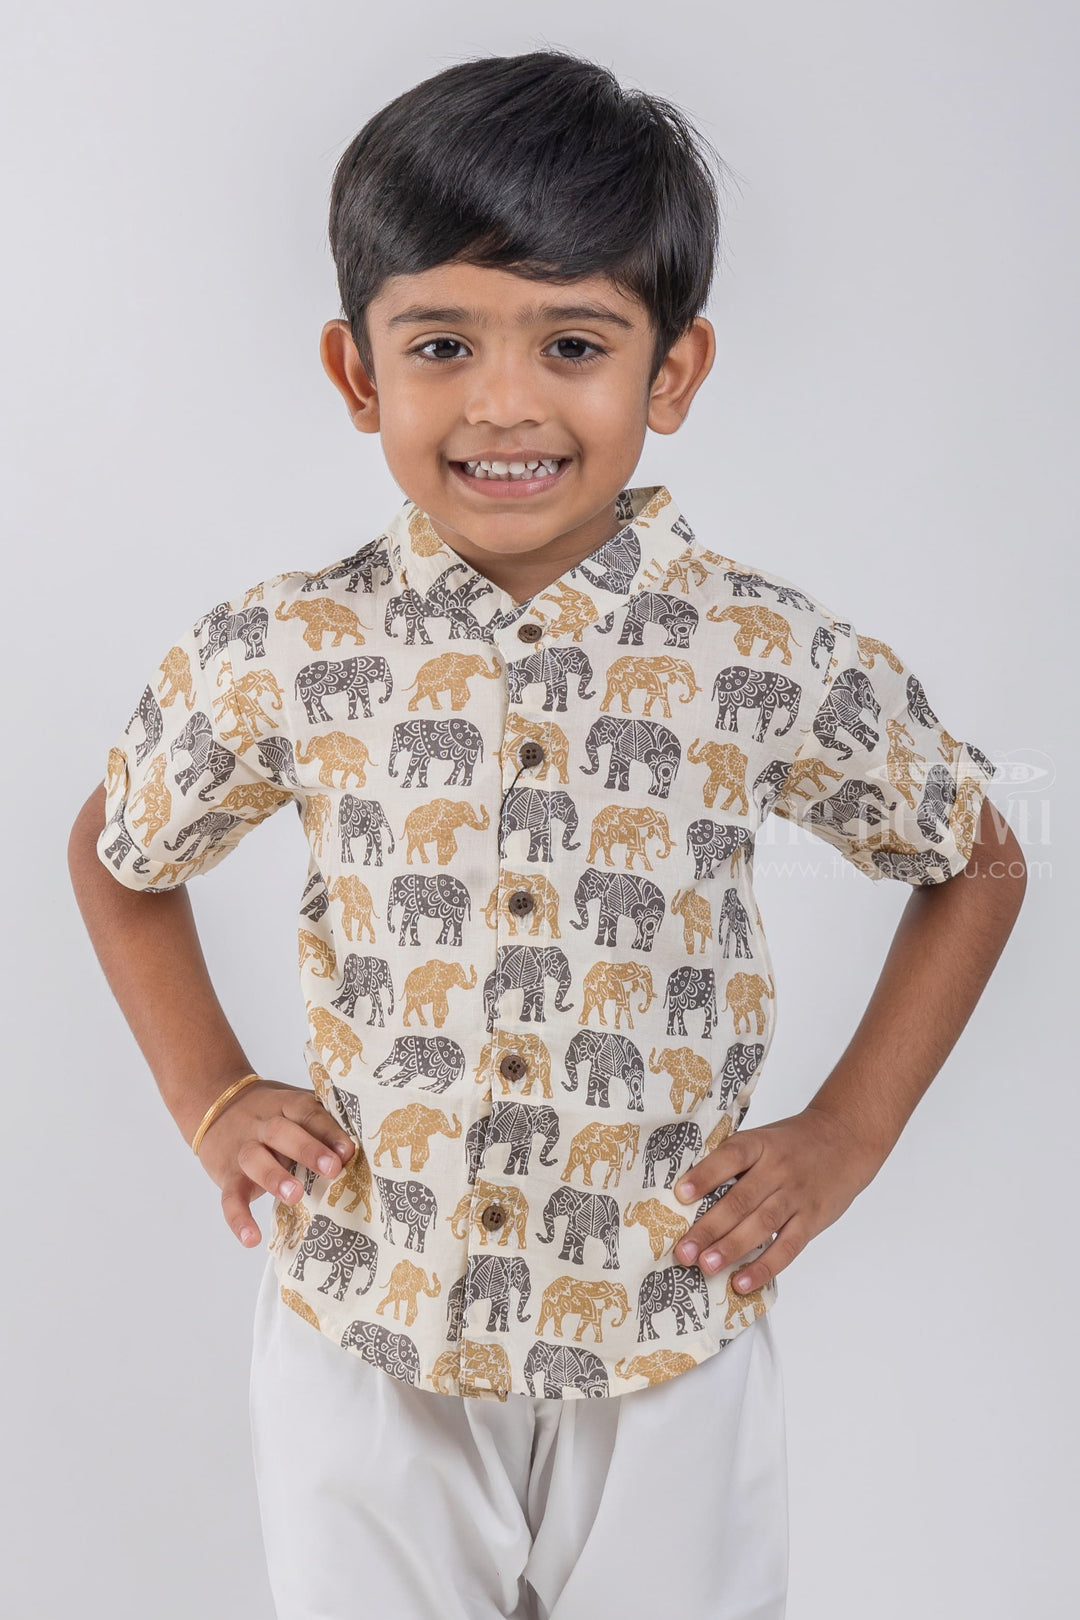 The Nesavu Boys Cotton Shirt Elegant Elephant Design Printed Half White Cotton Shirt for Boys psr silks Nesavu 14 (6M) / Half White / Cotton BS040B